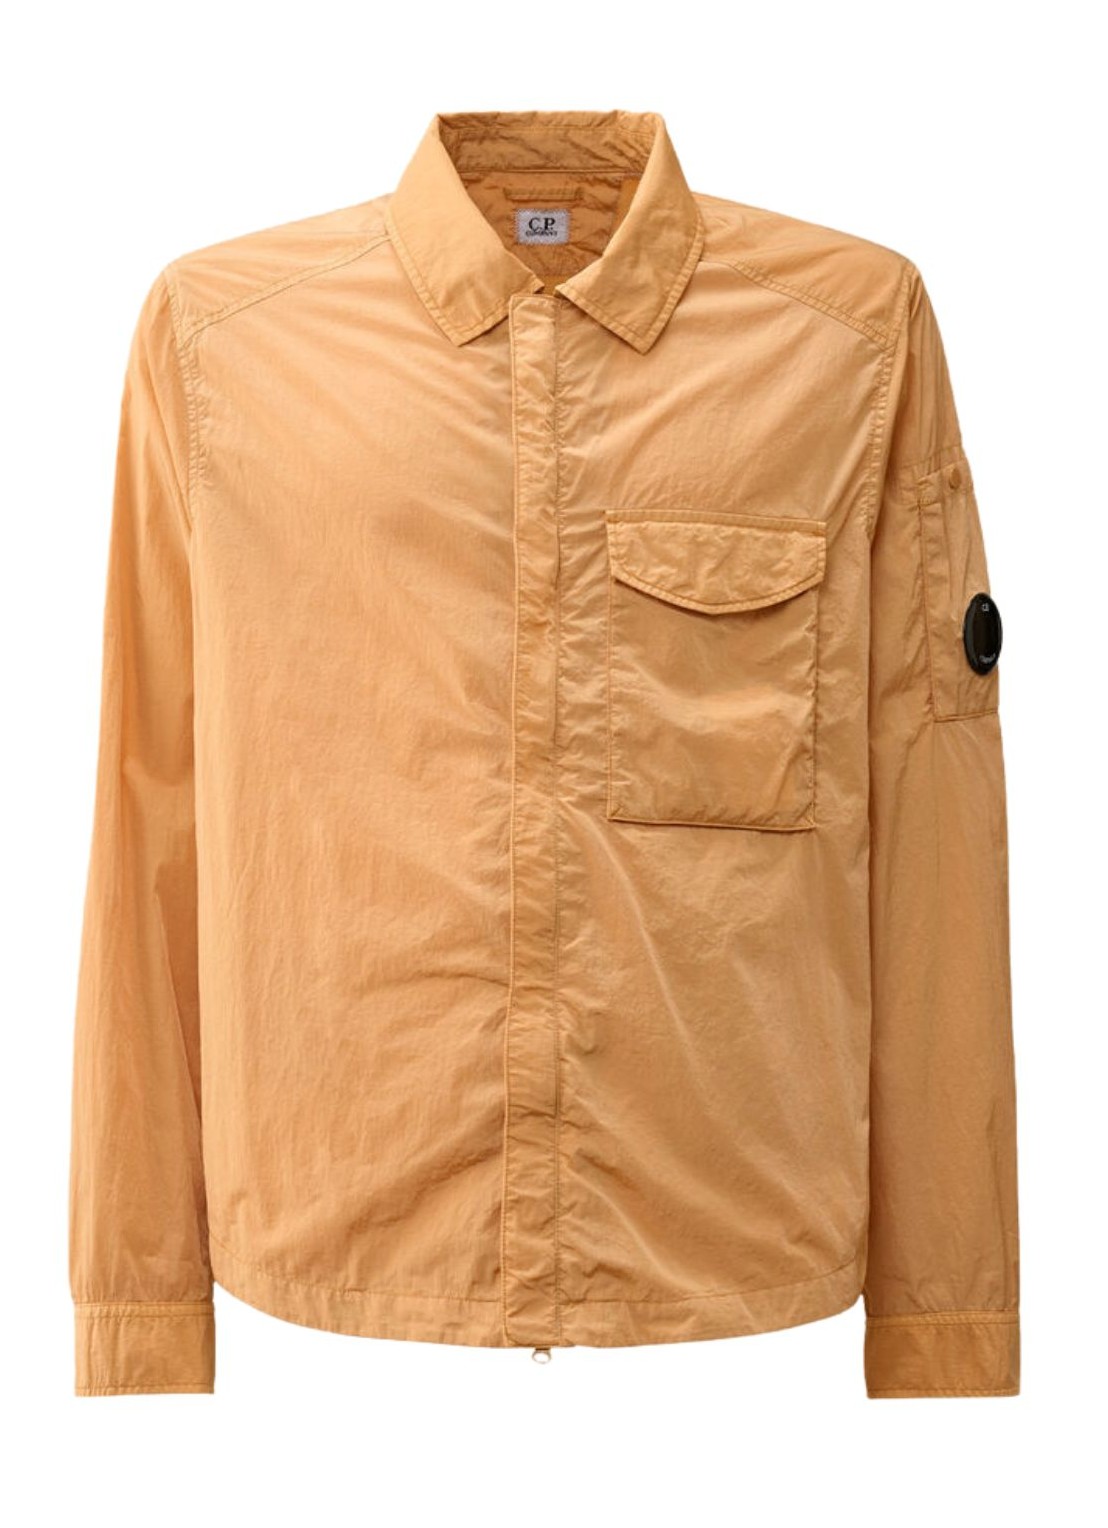 Outerwear c.p.company outerwear man chrome-r pocket overshirt 16cmos039a005904g 437 talla naranja
 